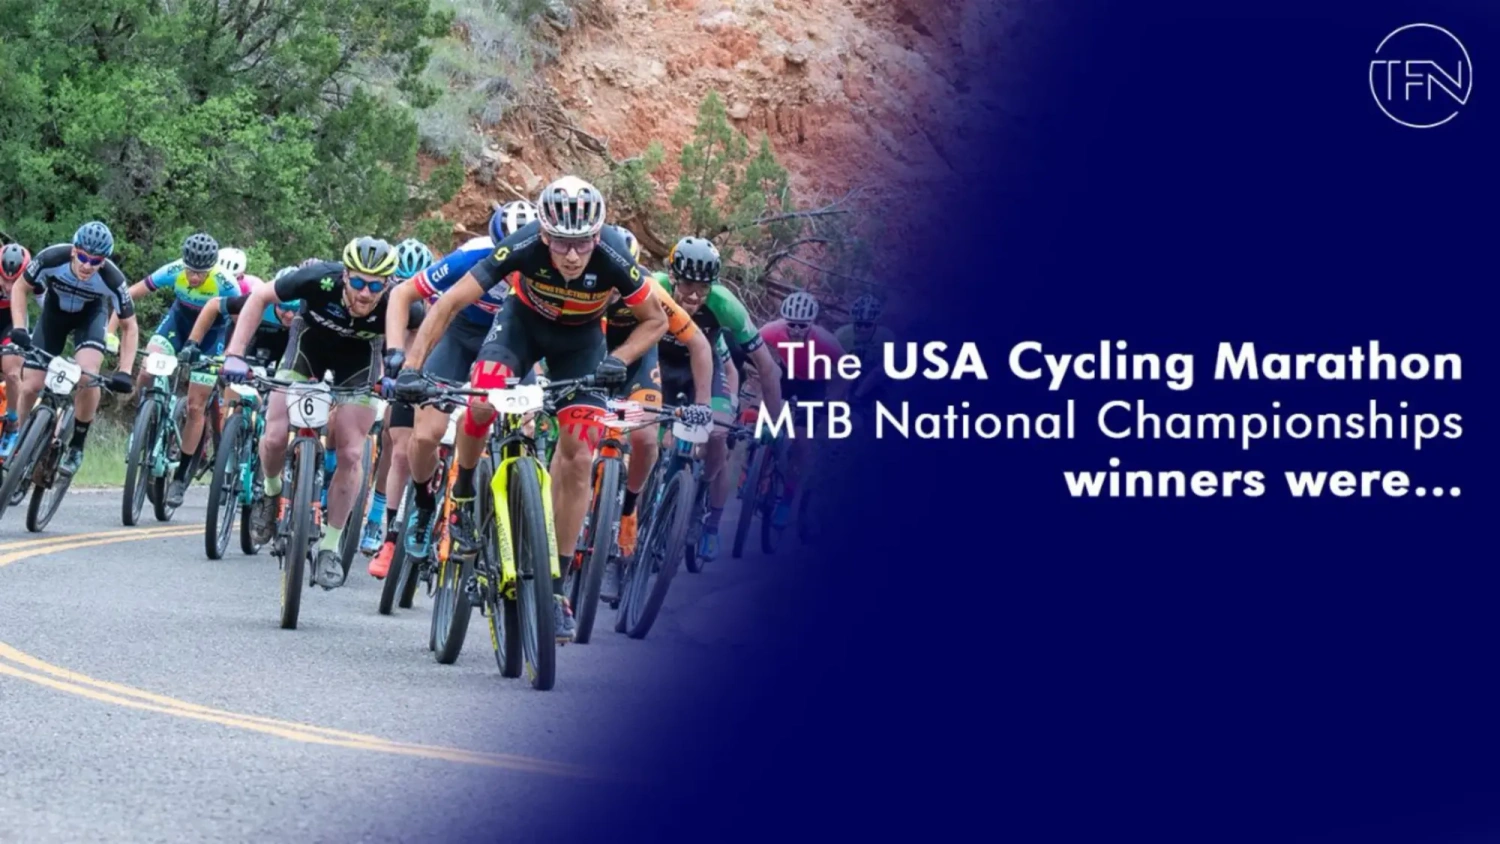 The USA Cycling Marathon MTB National Championships winners were...